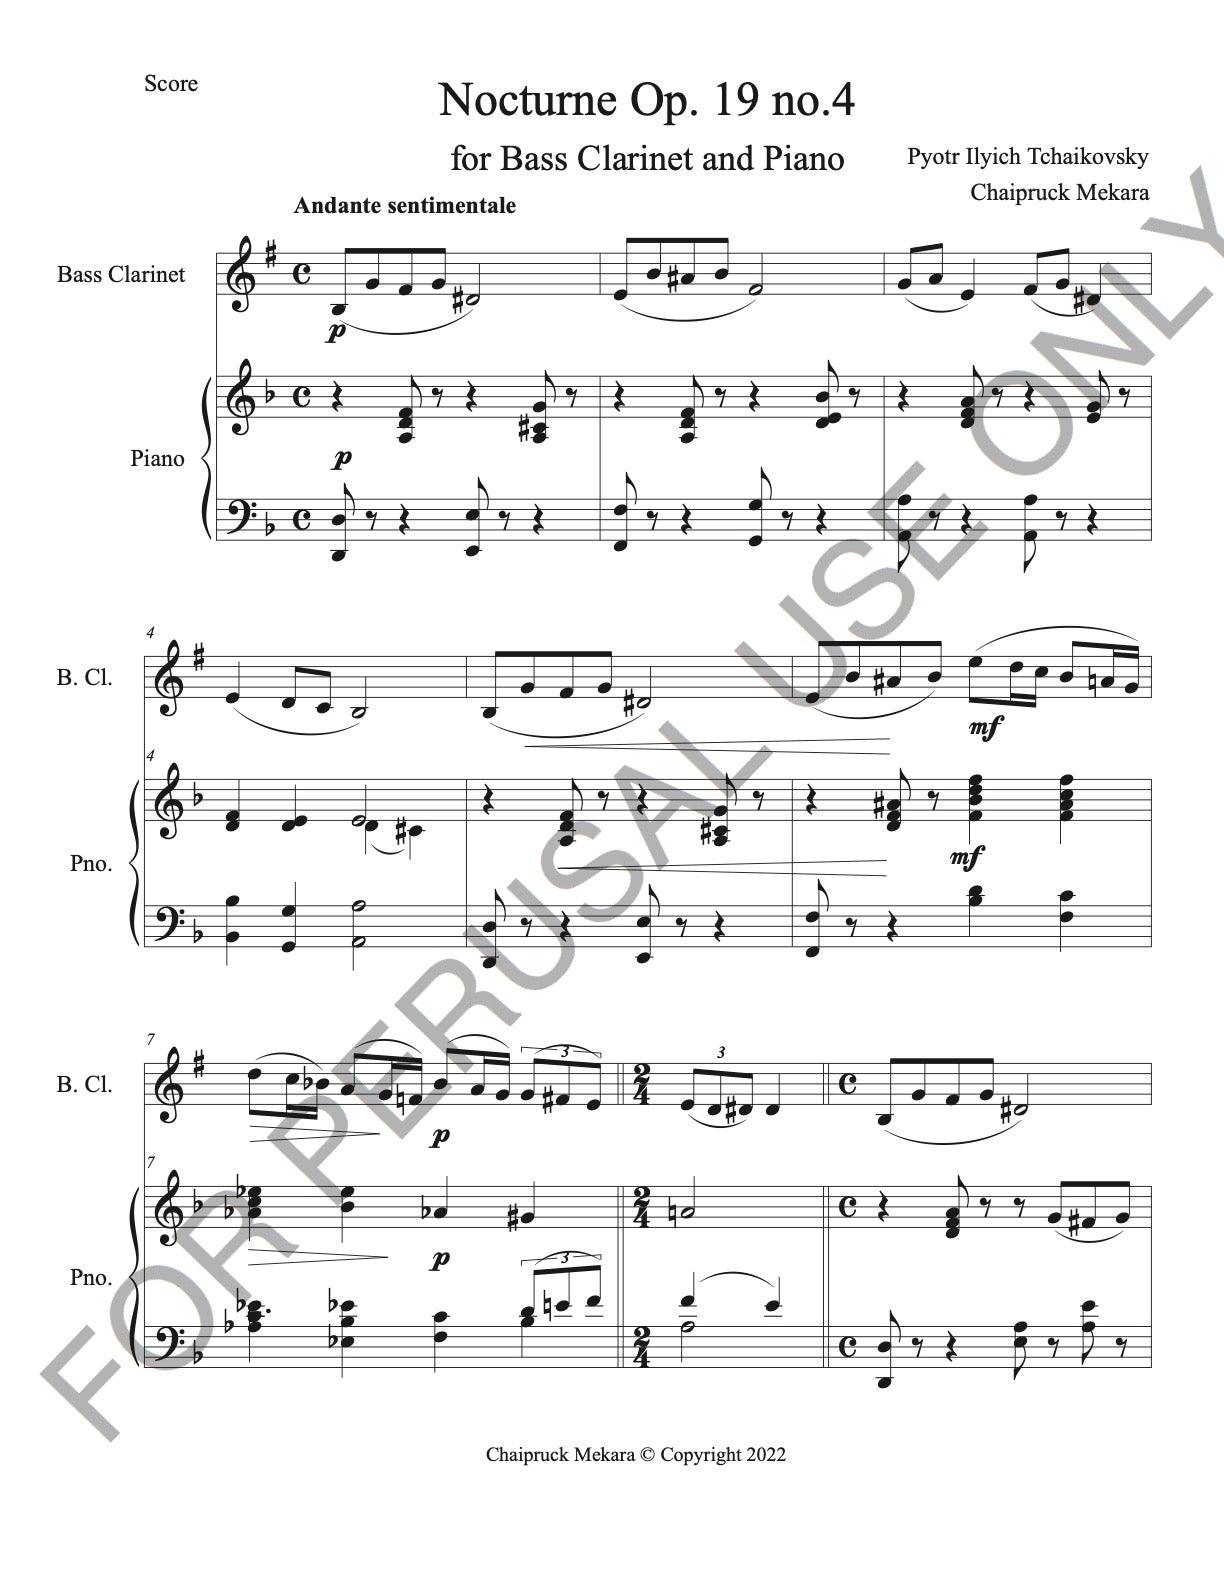 Bass Clarinet and Piano sheet music: Tchaikovsky's Nocturne, Op. 19 - ChaipruckMekara